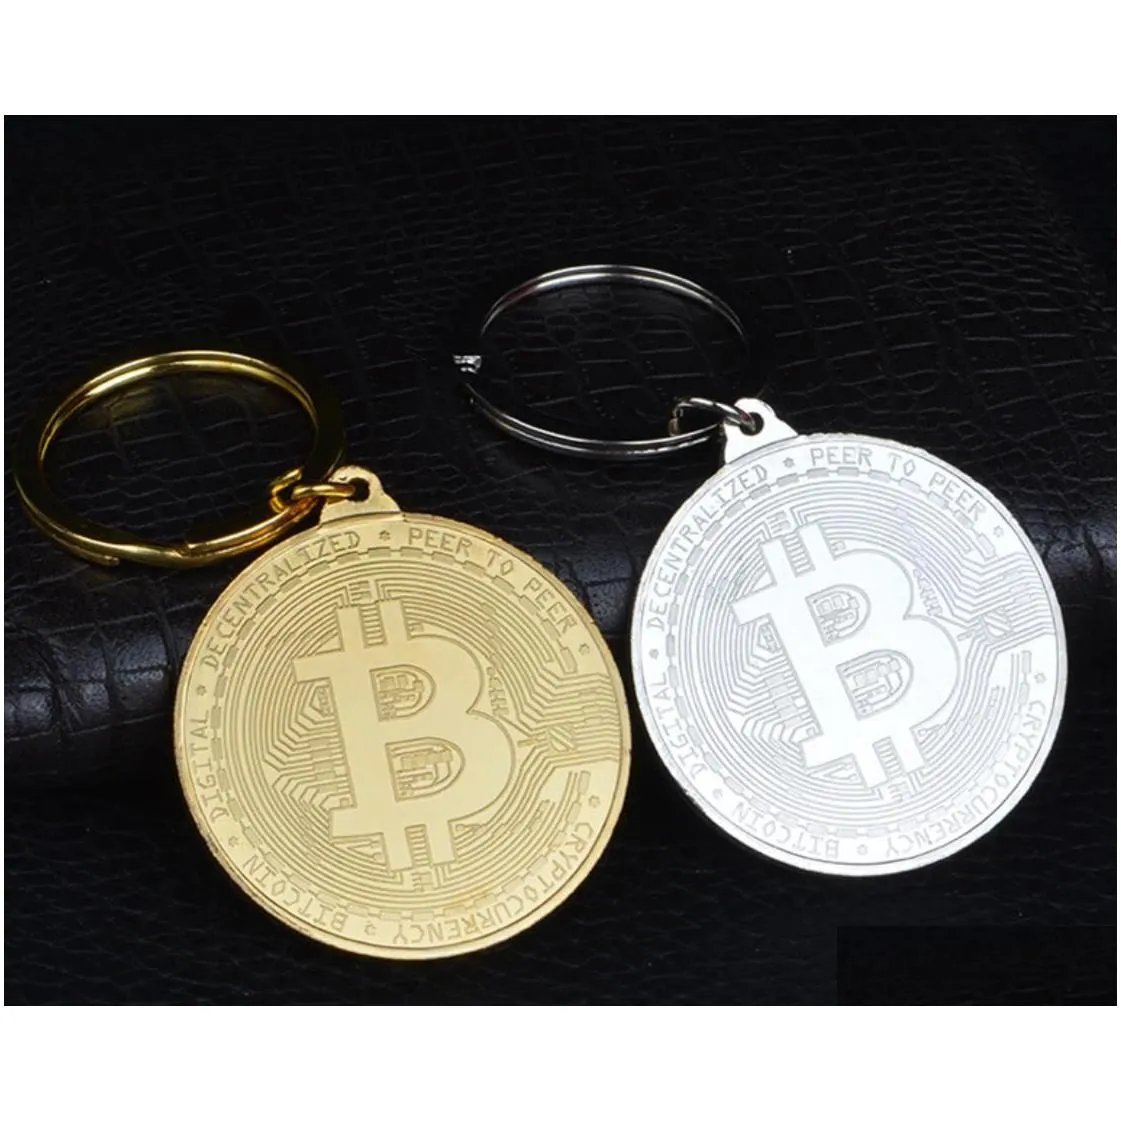 goldbtc keychain novelty party favor souvenir gift commemorative metal keyring token